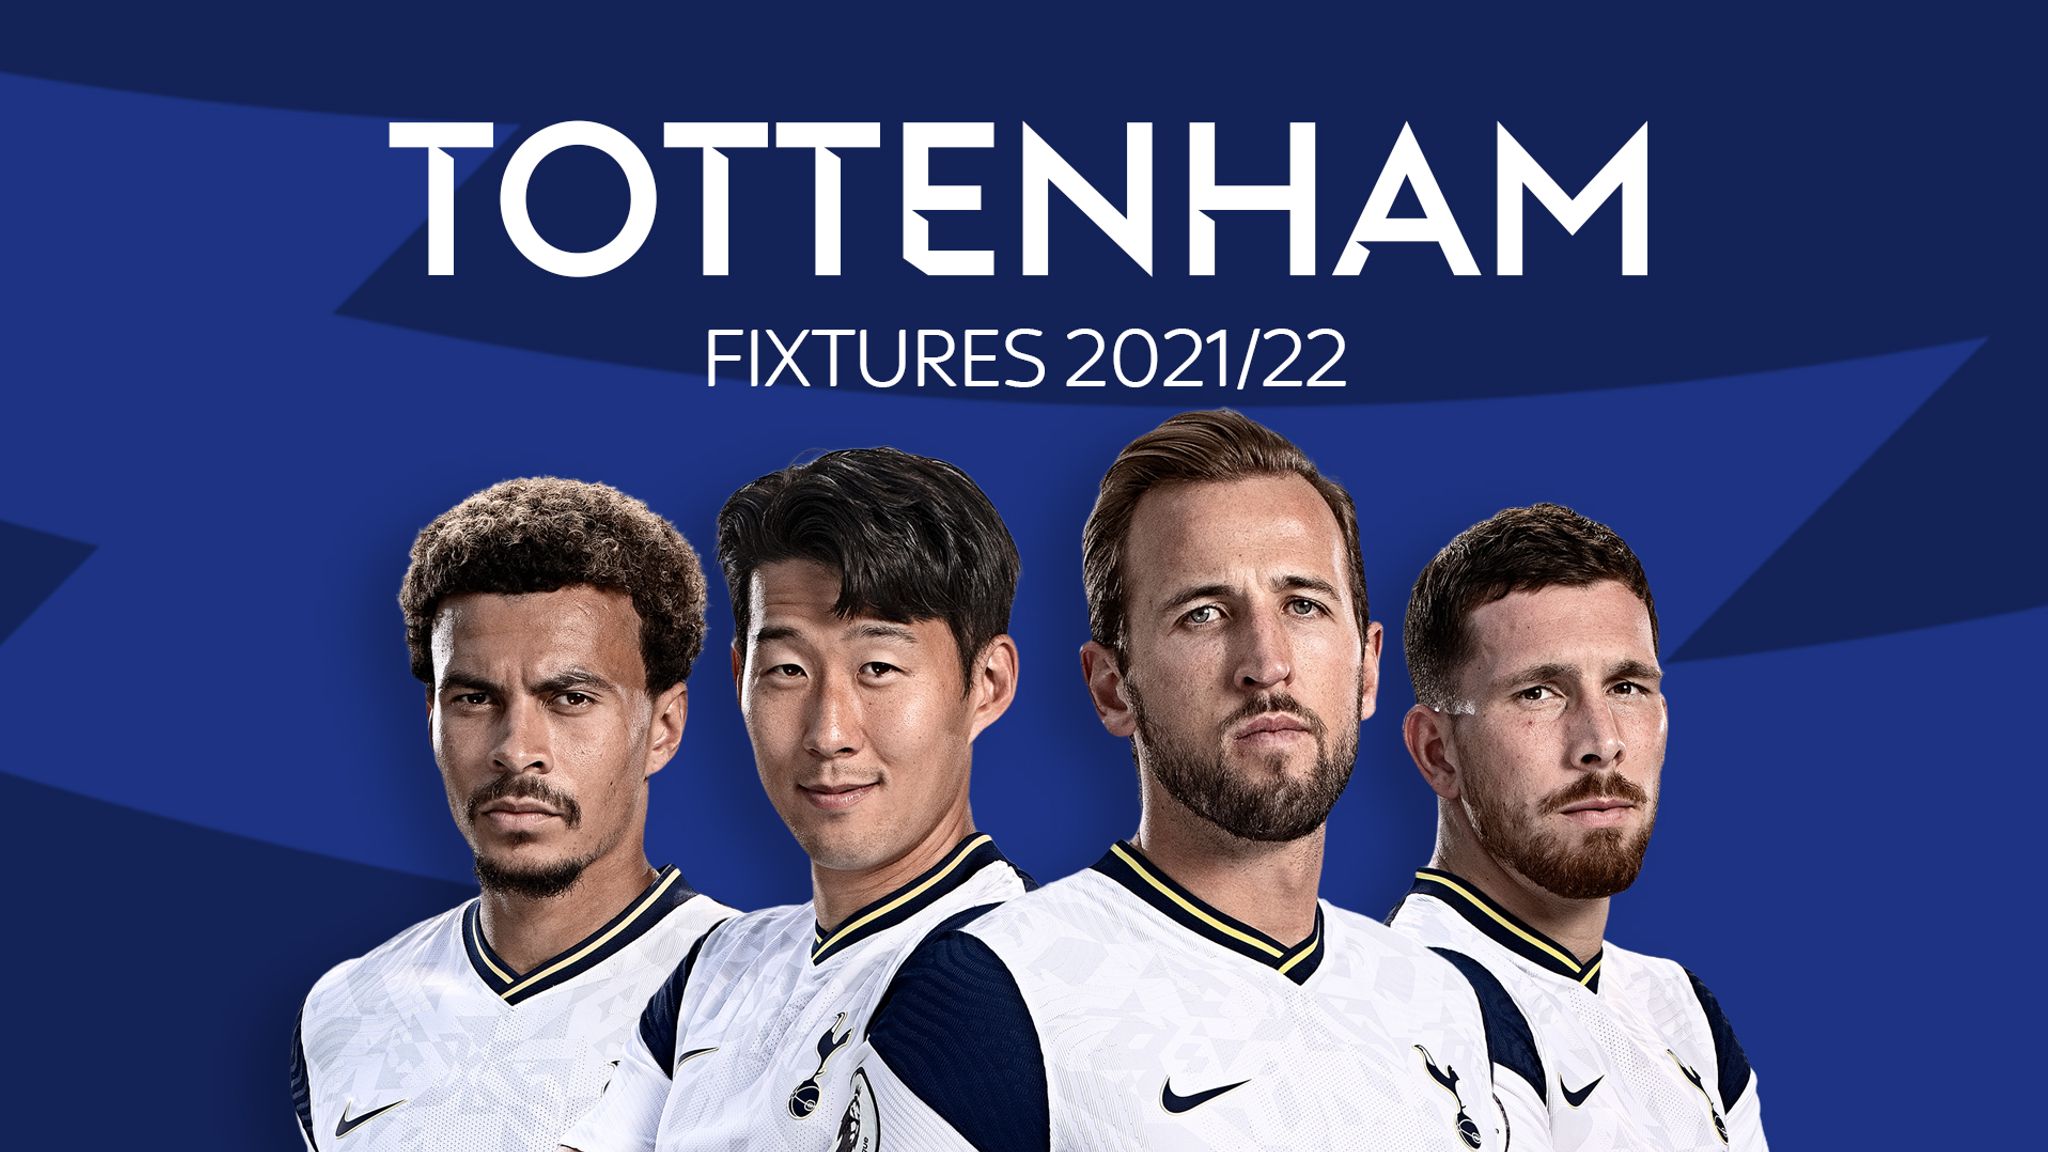 Tottenham Premier League 2021/22 fixtures and schedule Football News